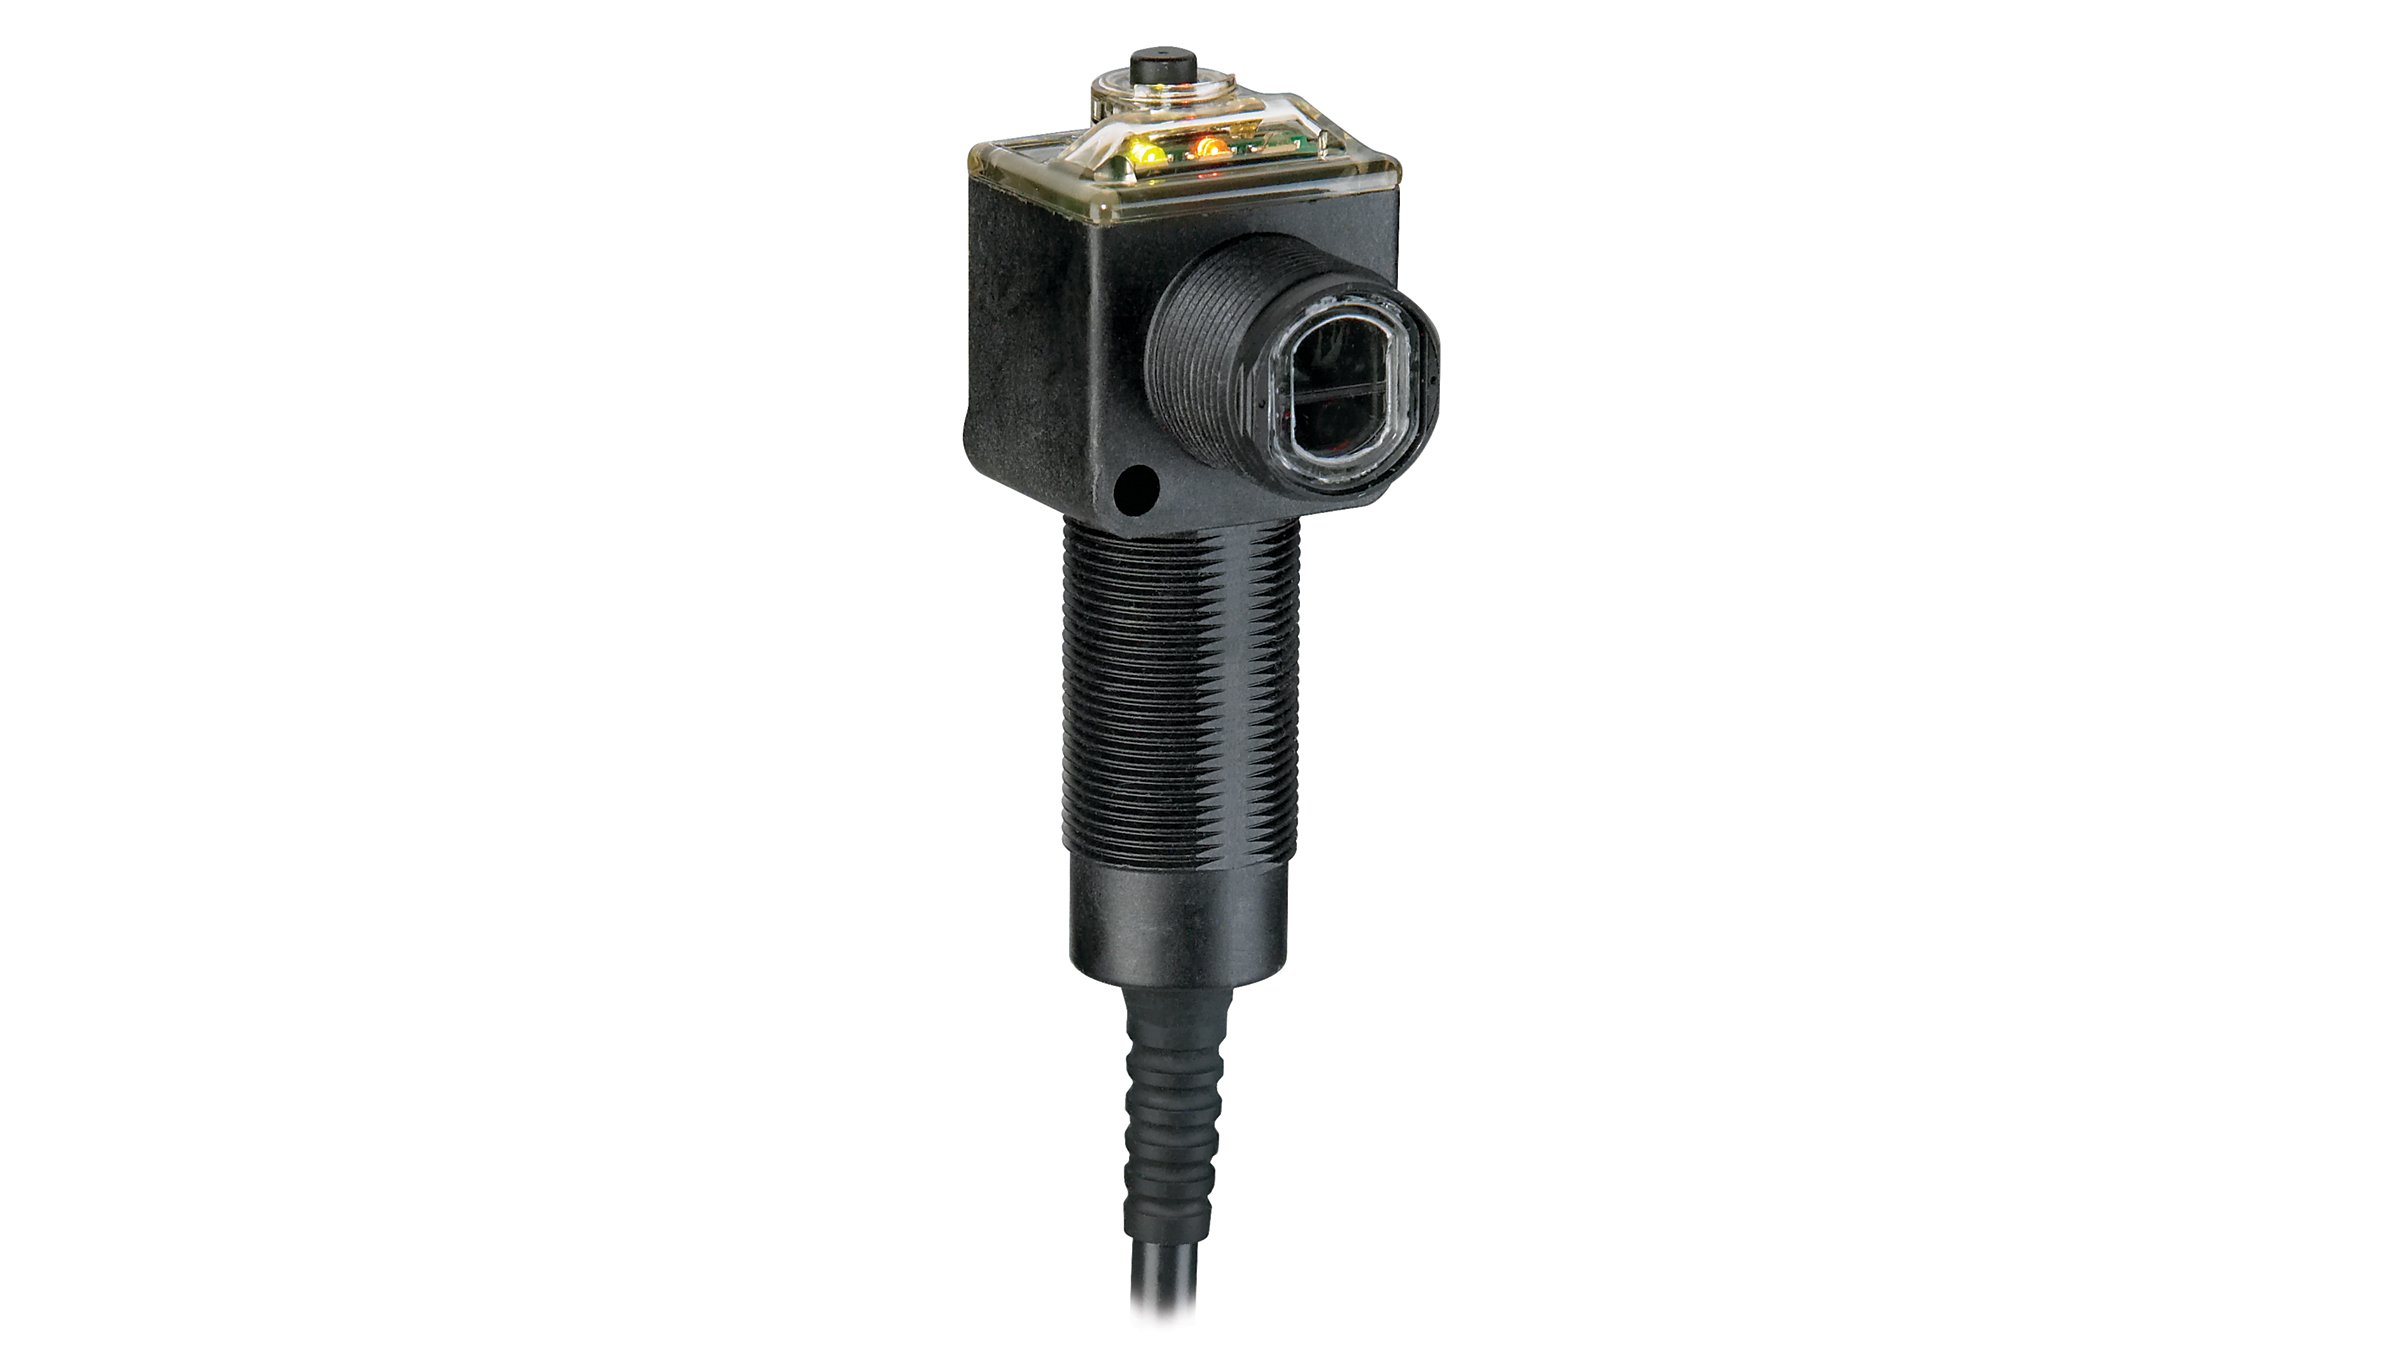 Black Allen-Bradley rectangular sensor with black sensor face and integrated cable.